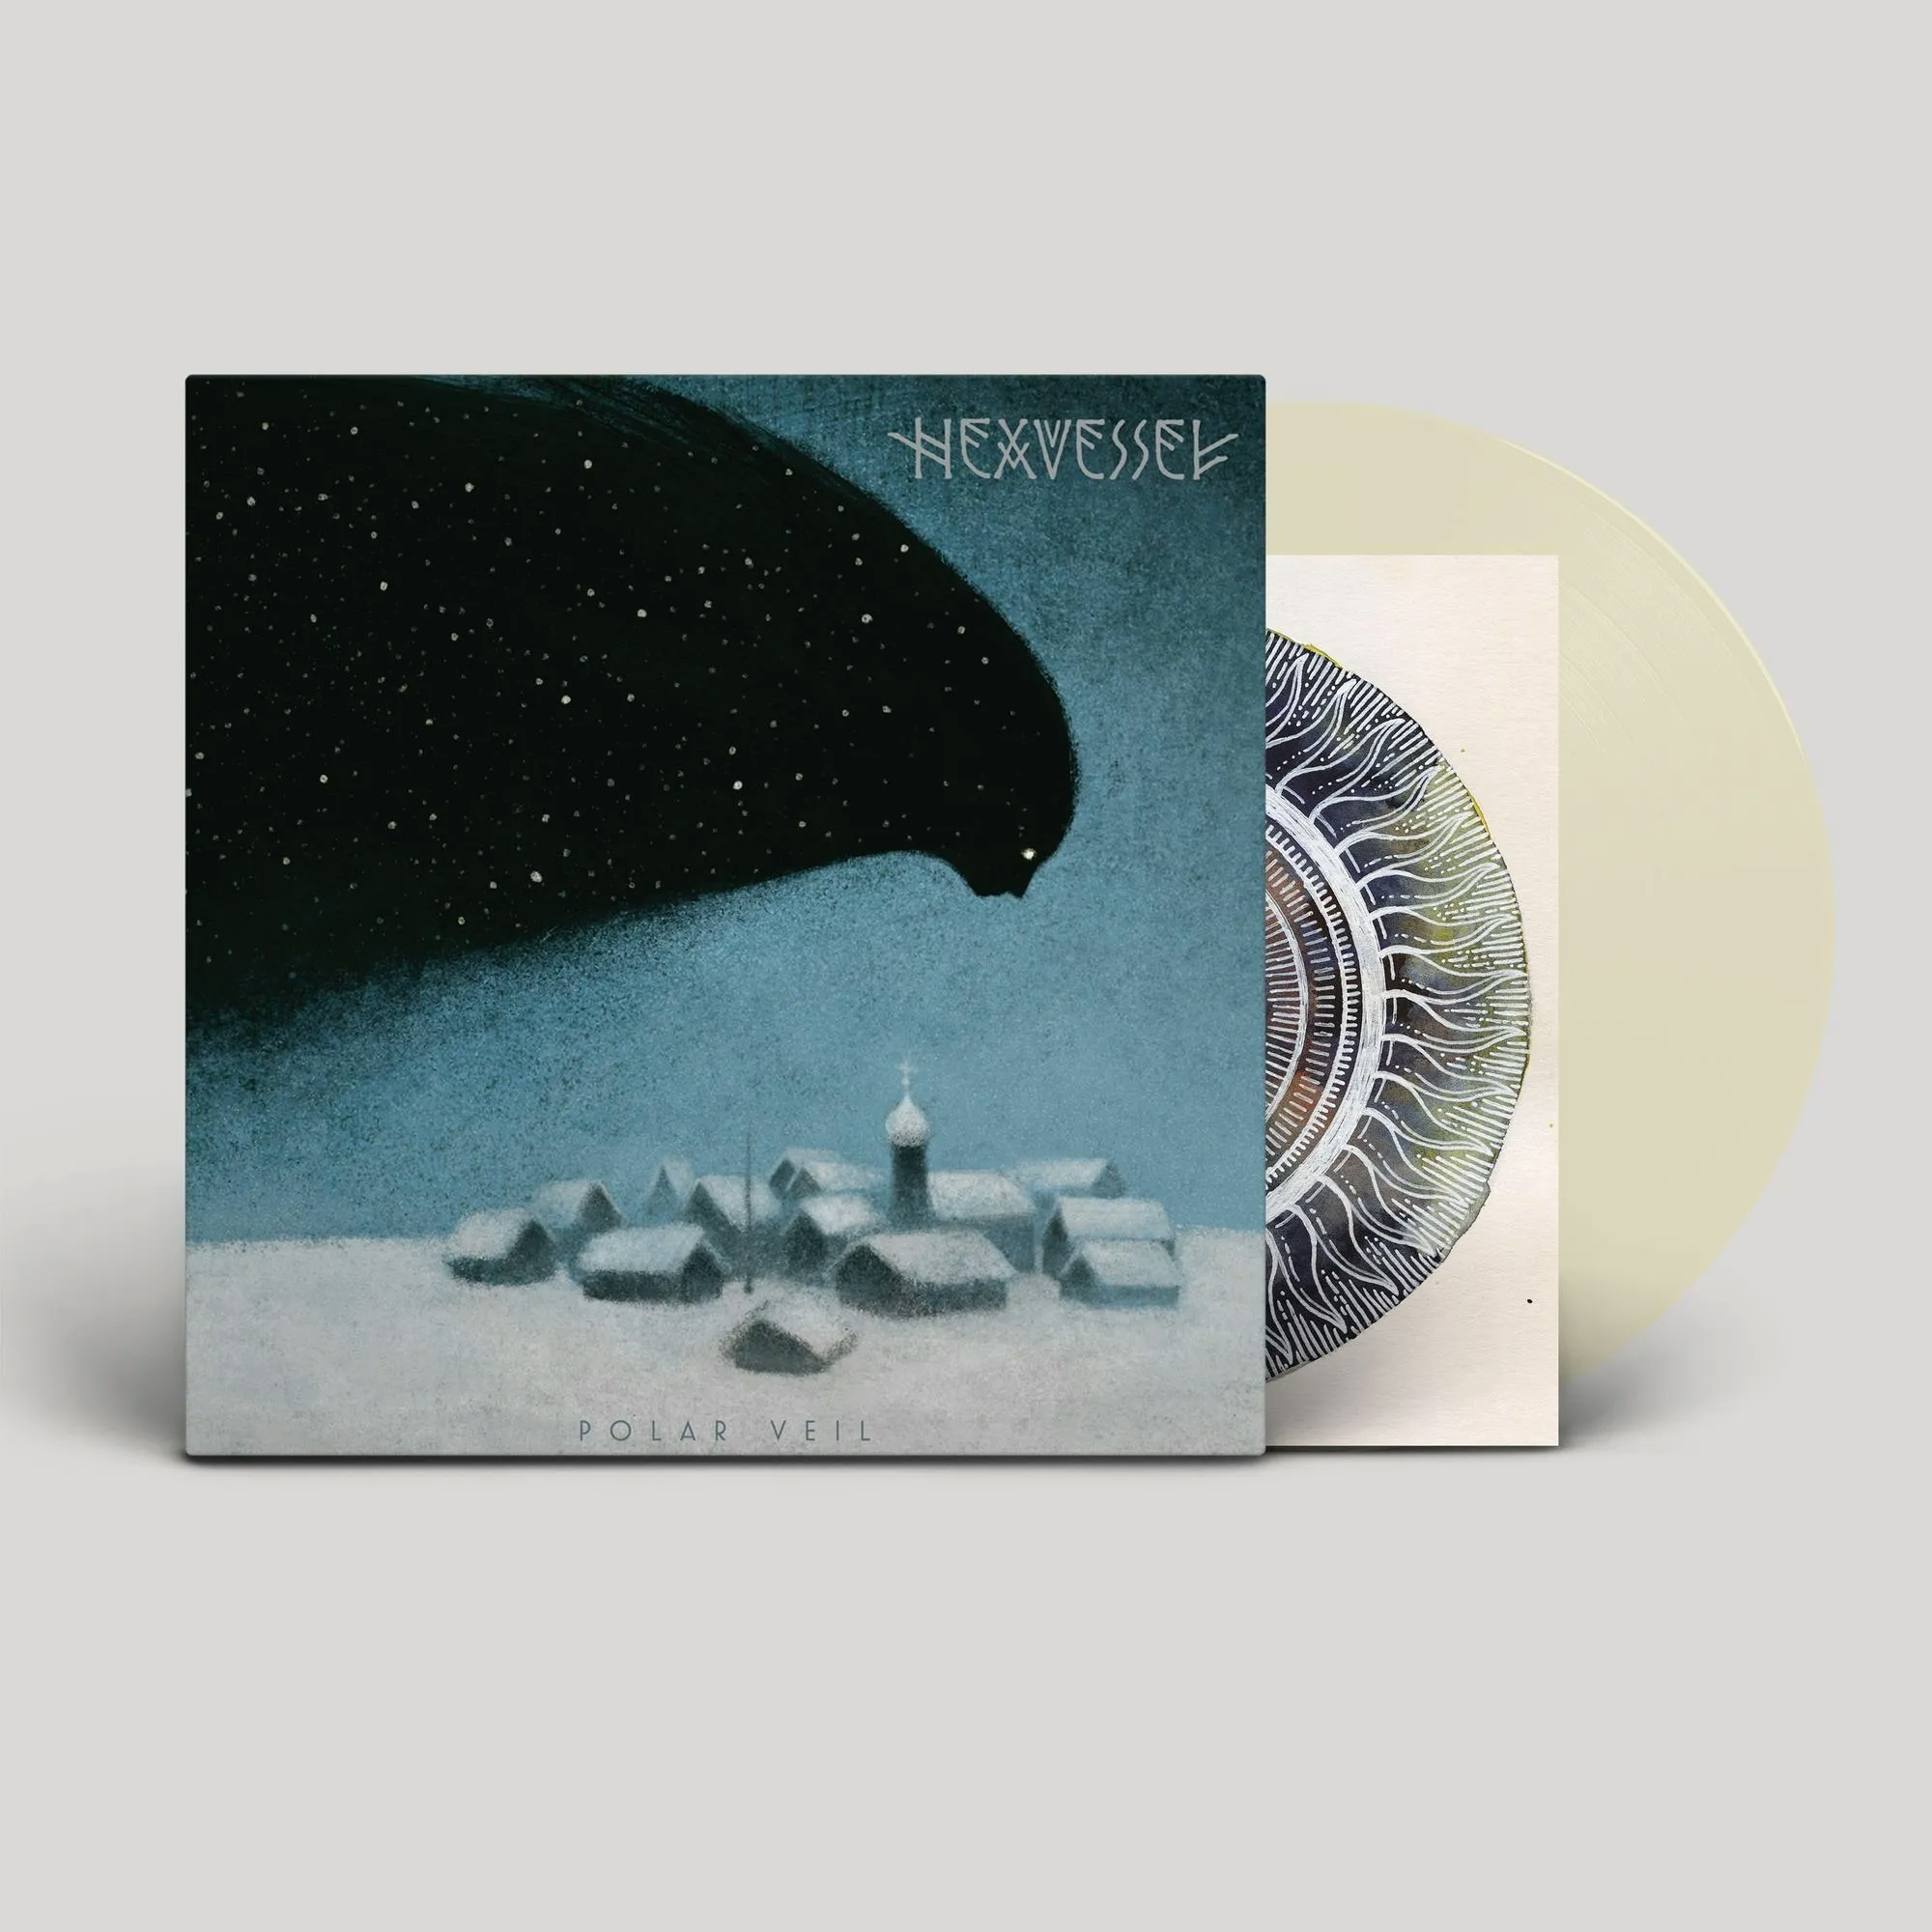 Album artwork for Polar Veil by Hexvessel